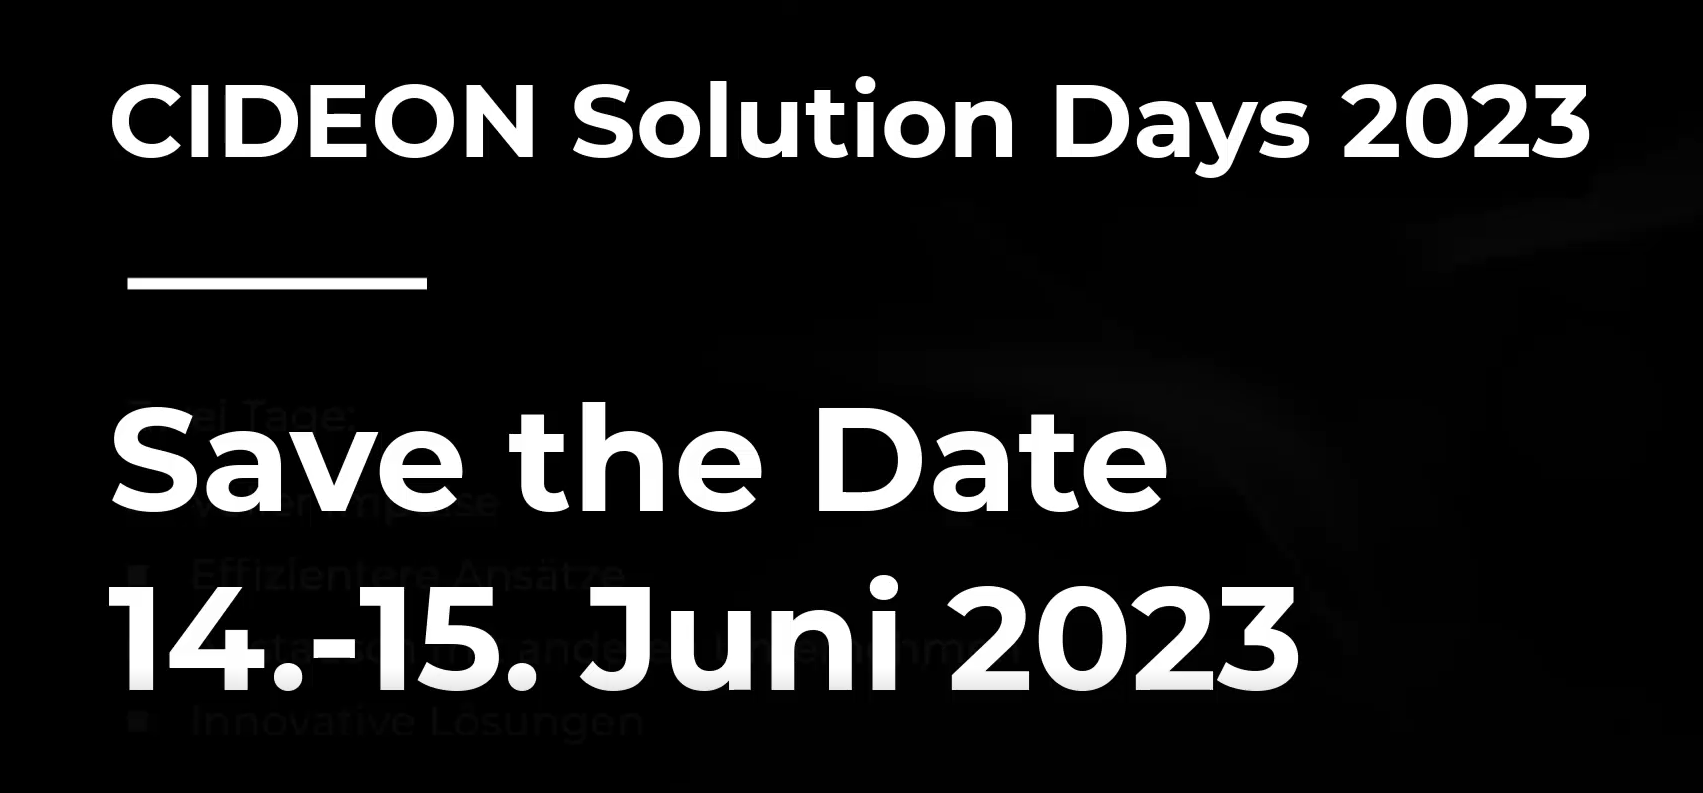 CIDEON Solution Days 2023